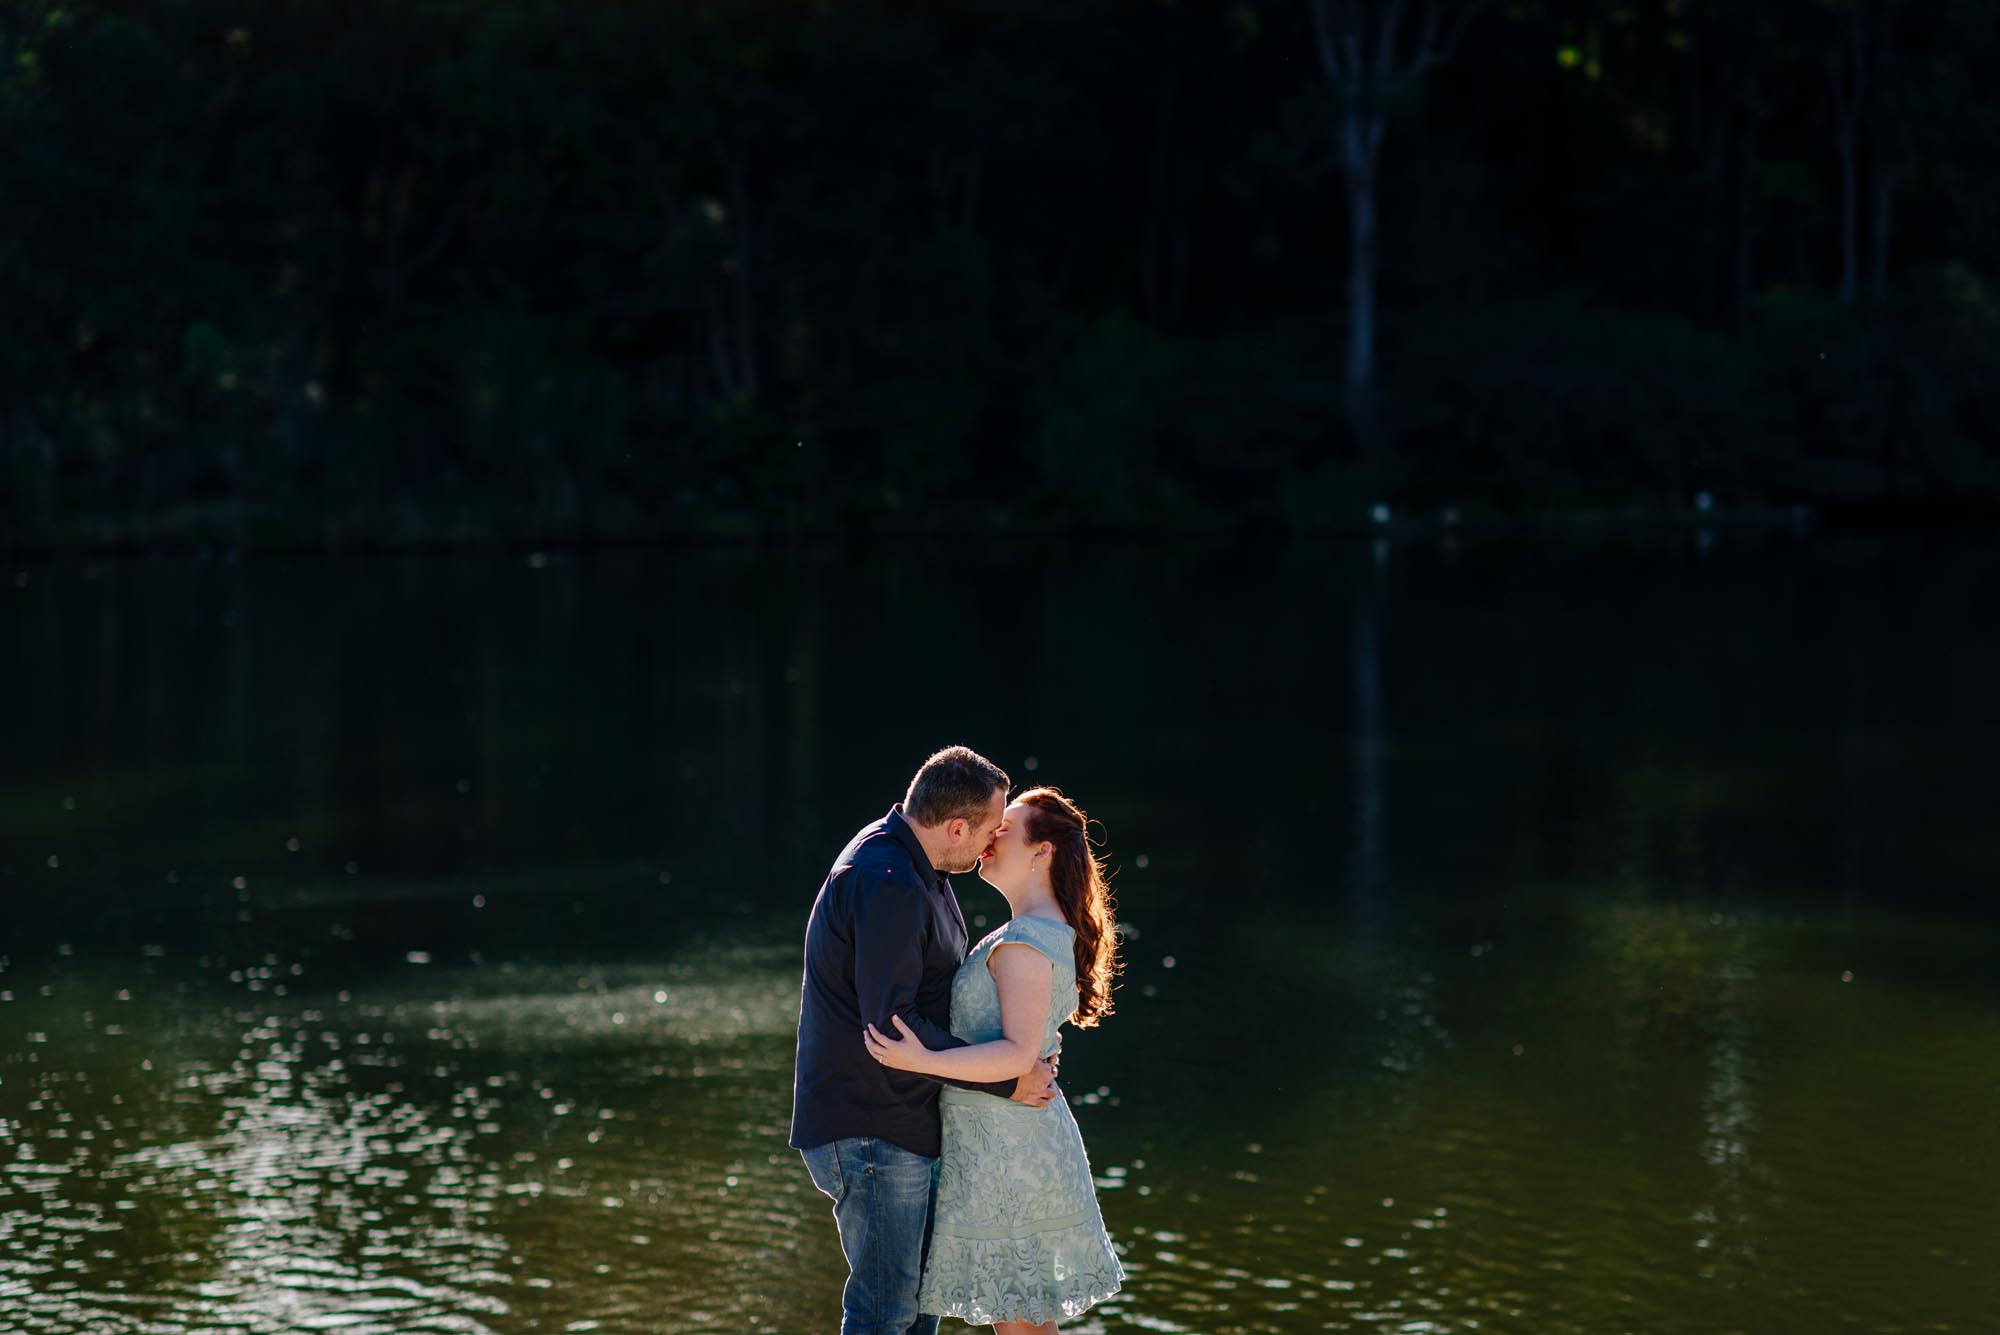 Neil and Emma kiss by Lake parramatta